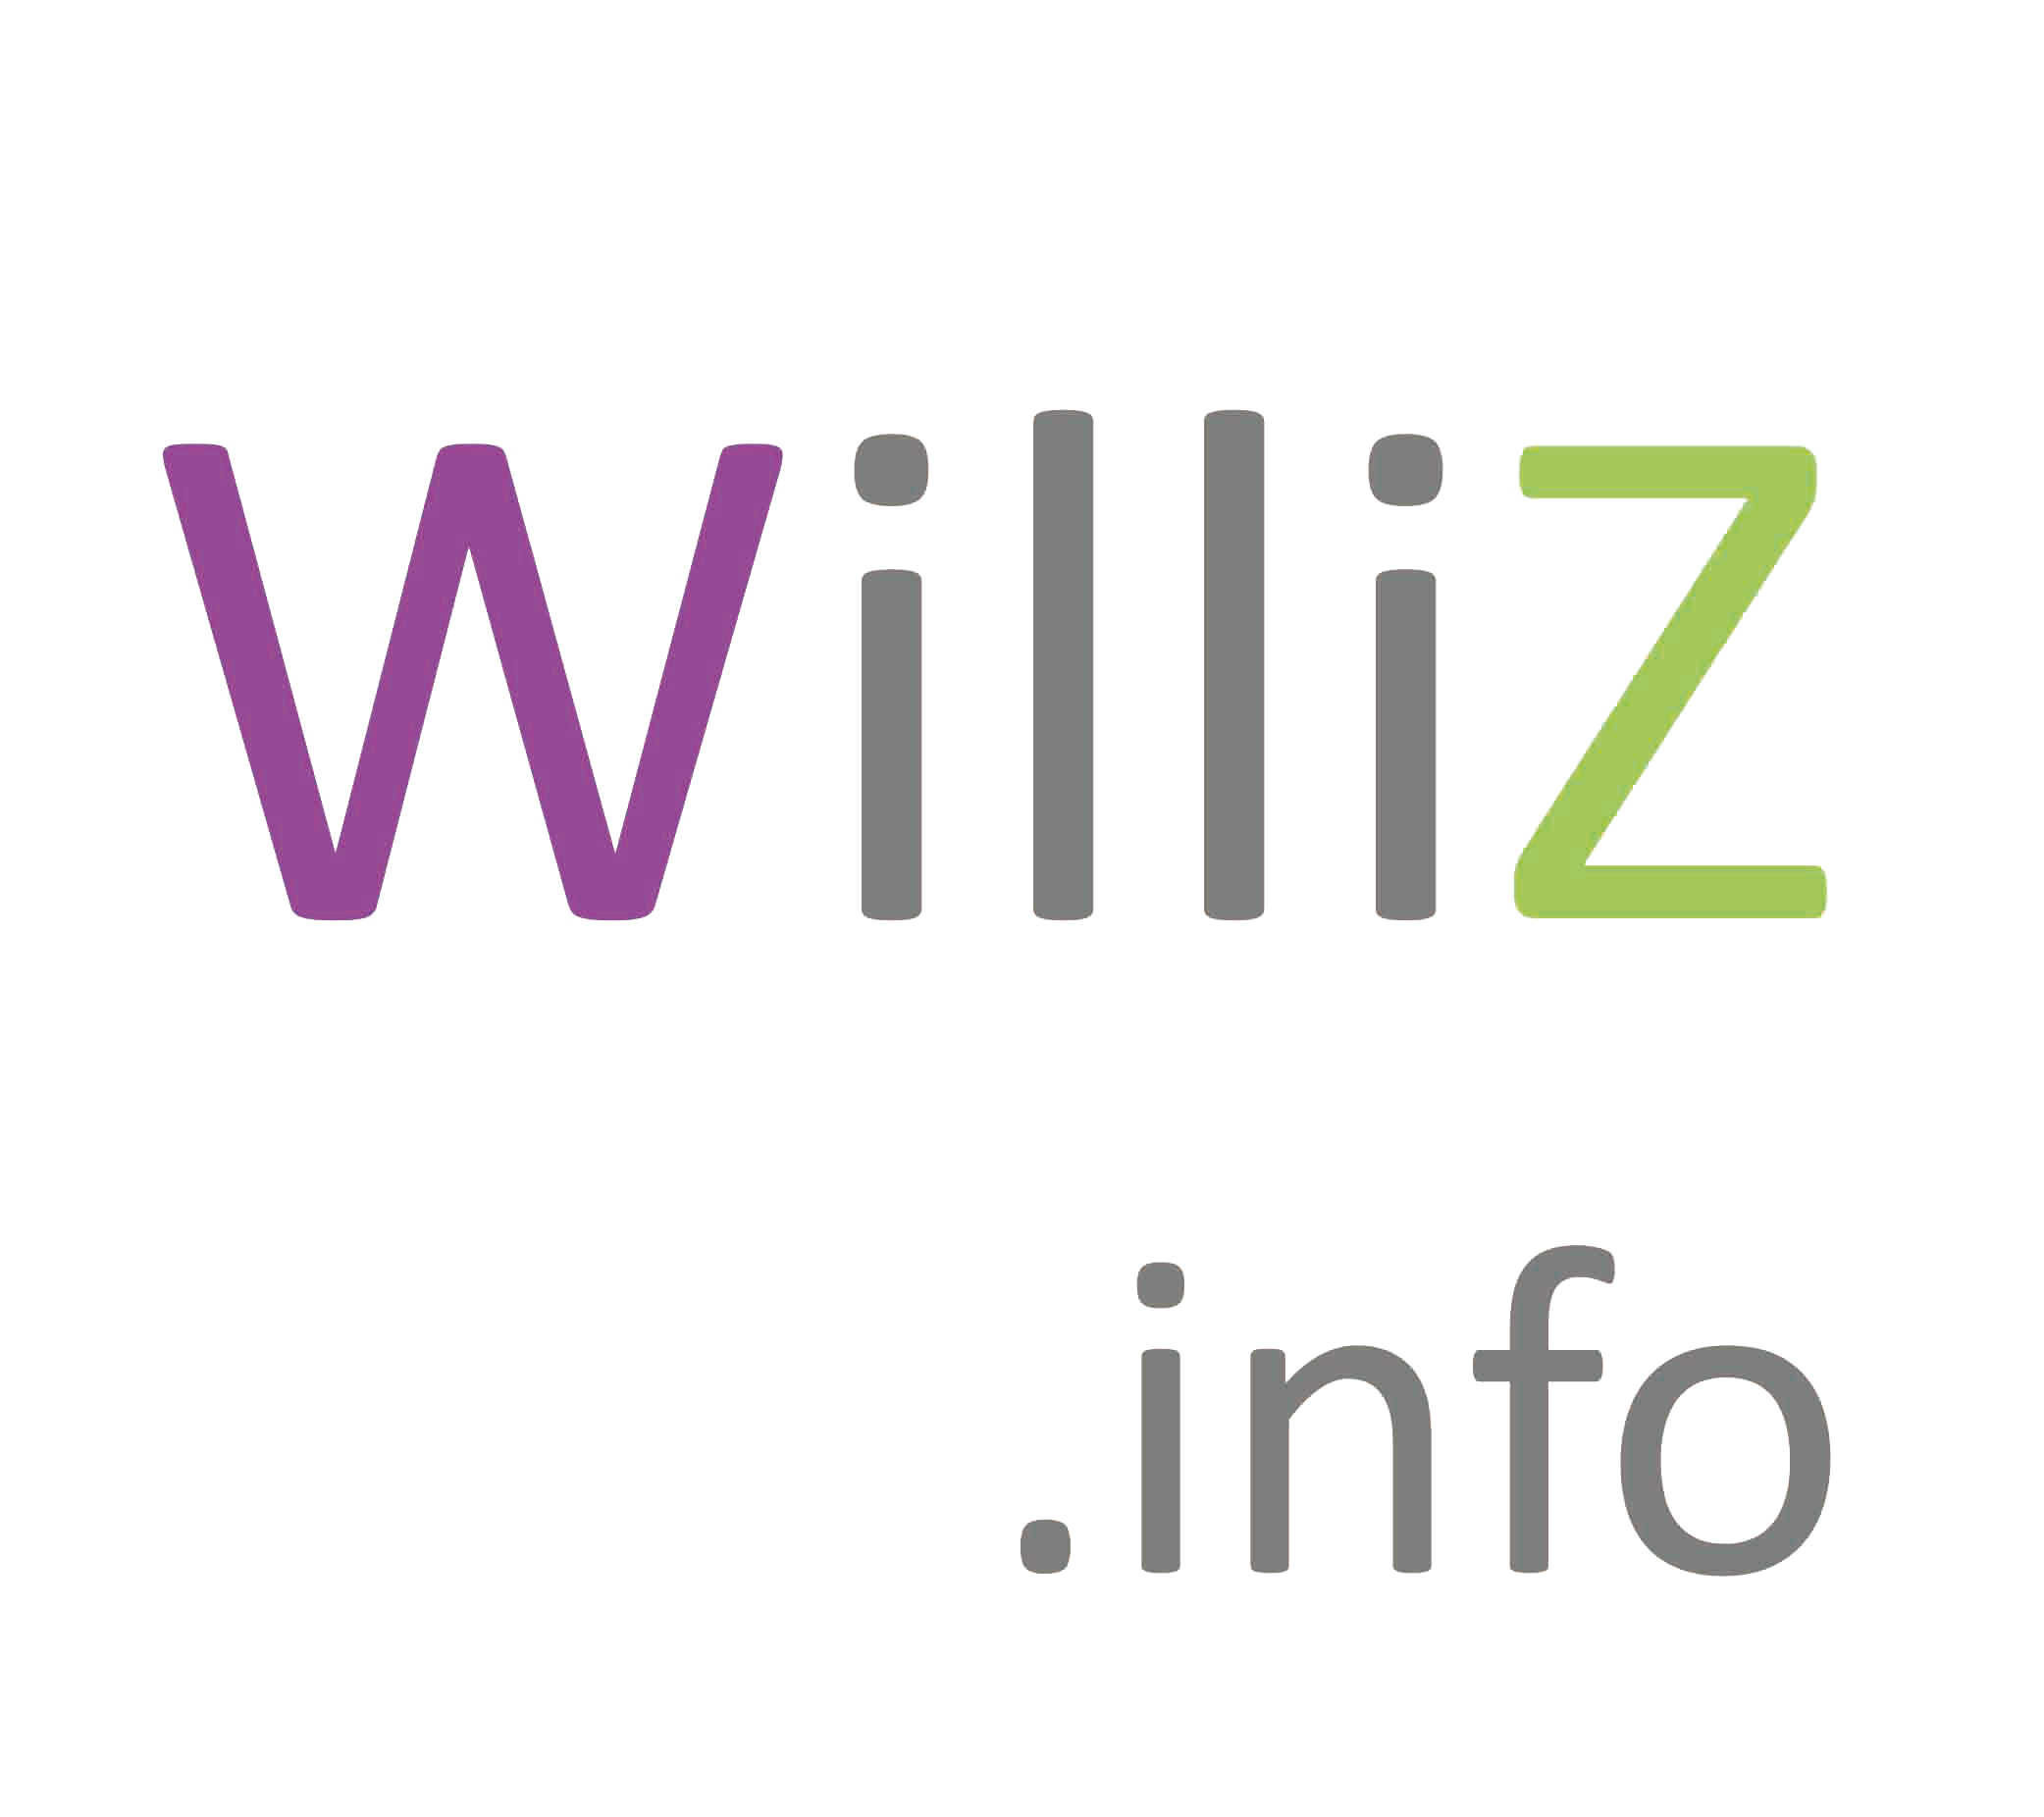 Williz